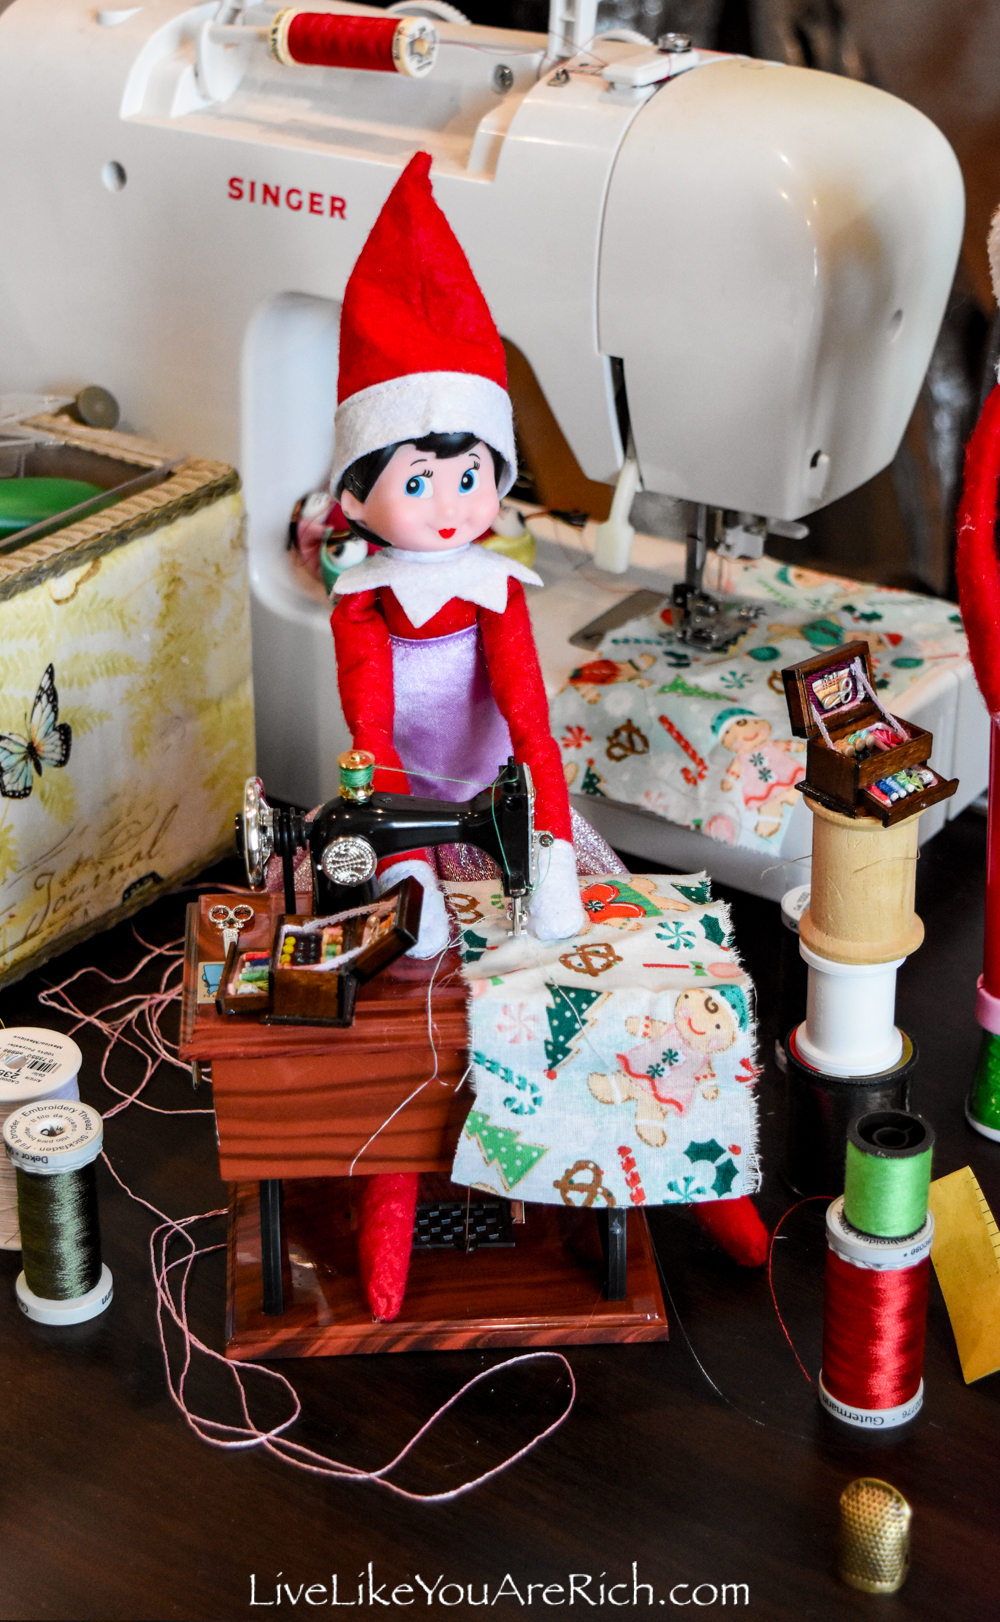 Elf on the Shelf Sewing Scene